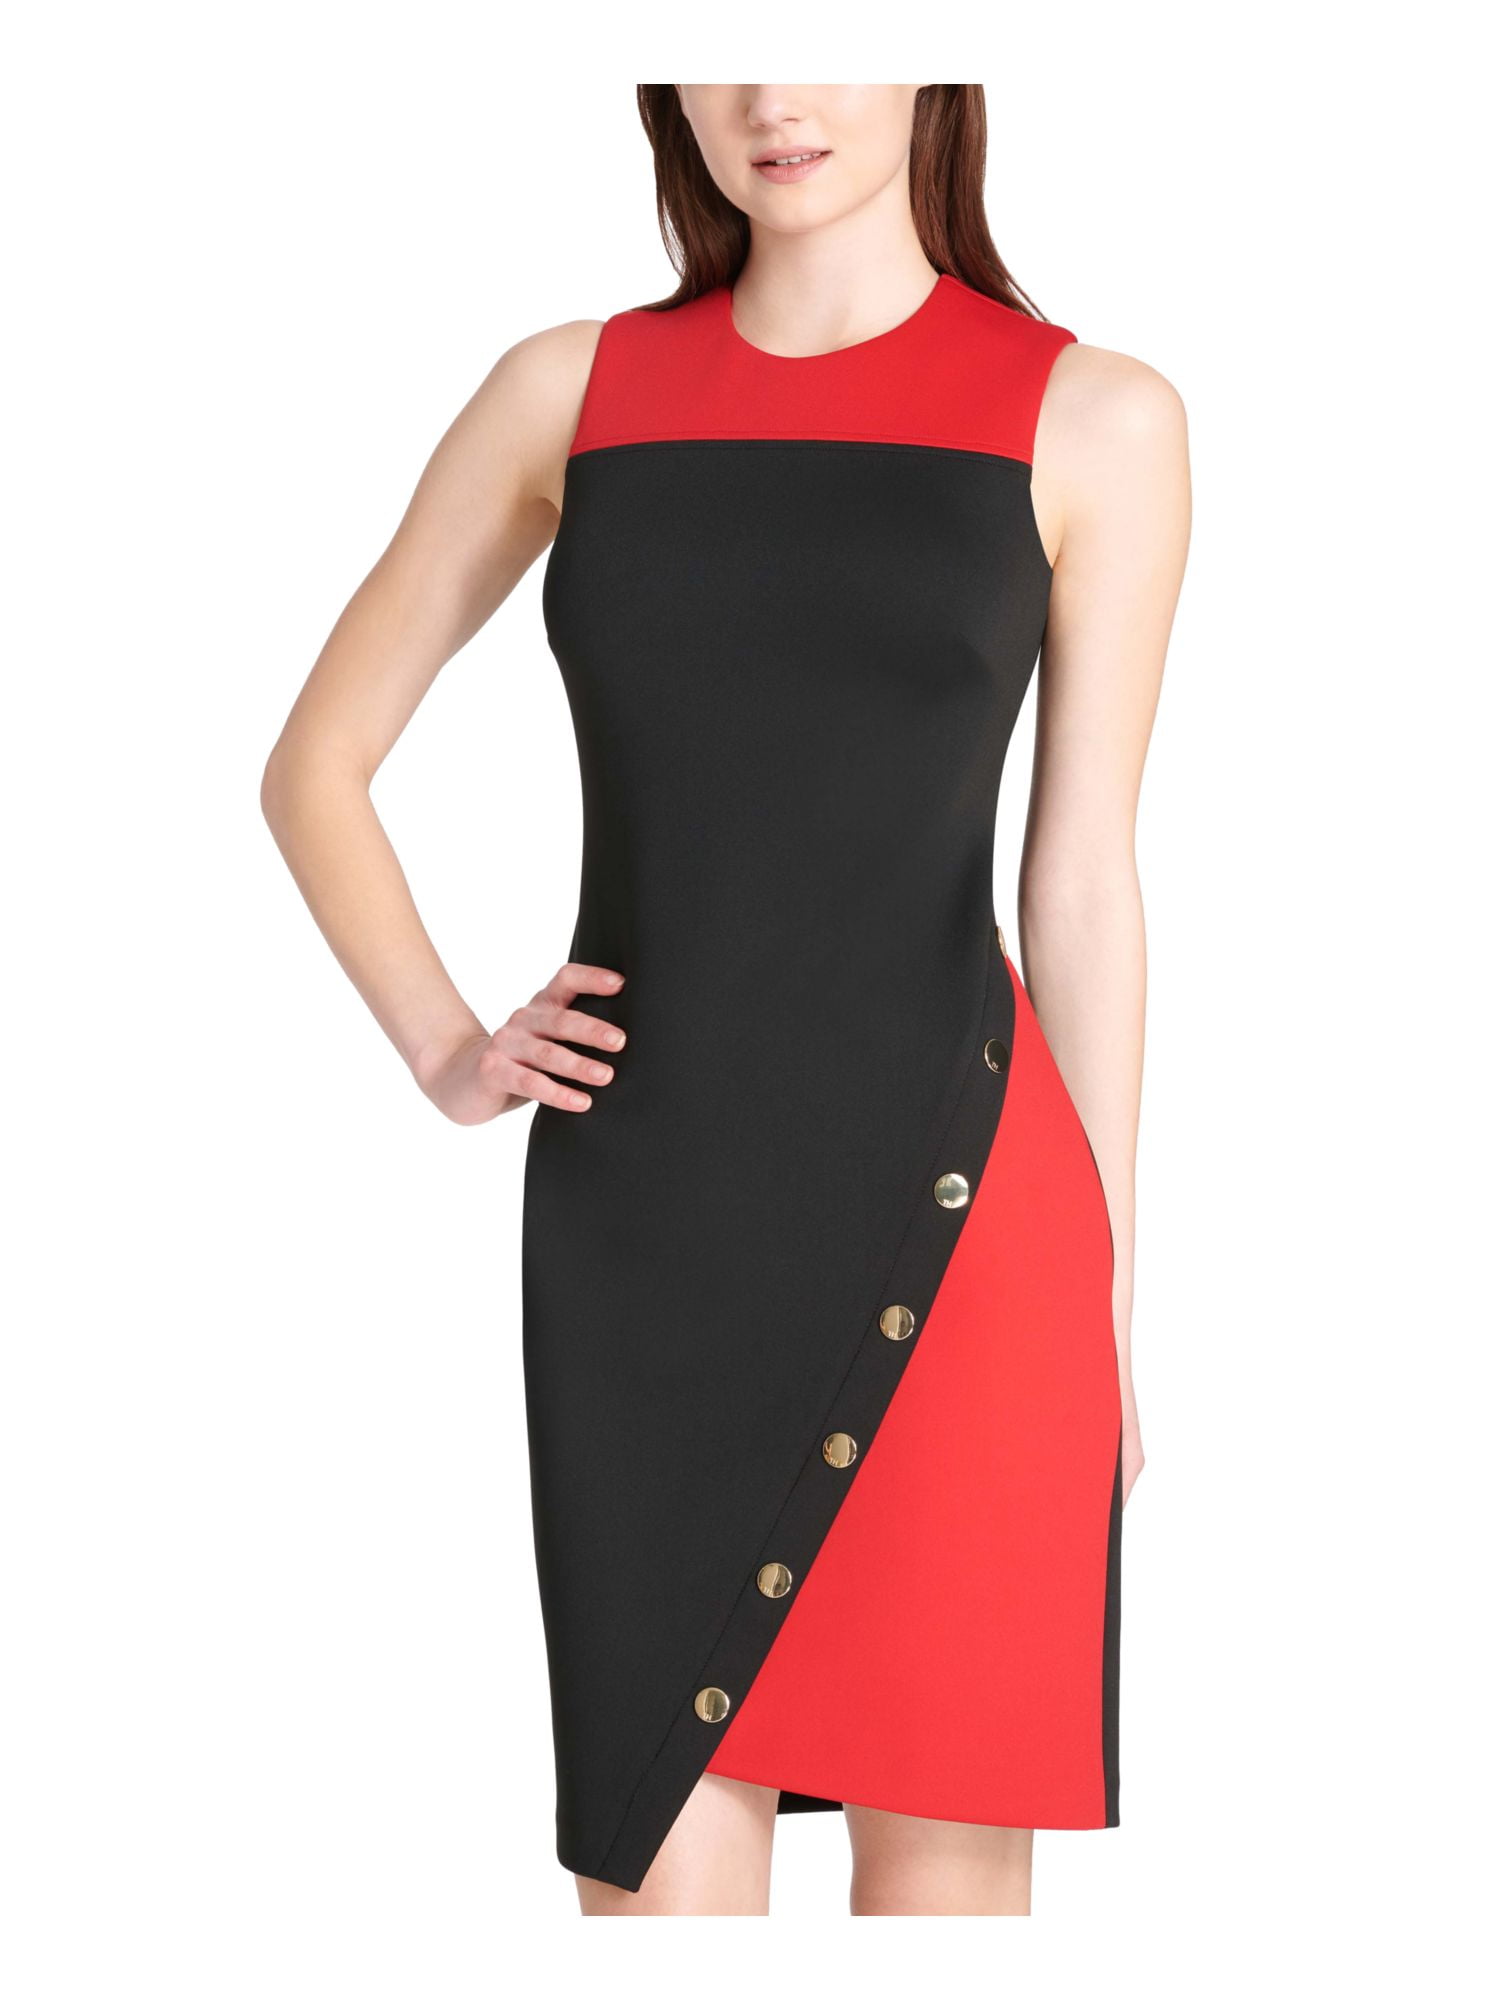 HILFIGER Embellished Dress Fit $99 Red B+B 8 Womens TOMMY Color Flare + Block